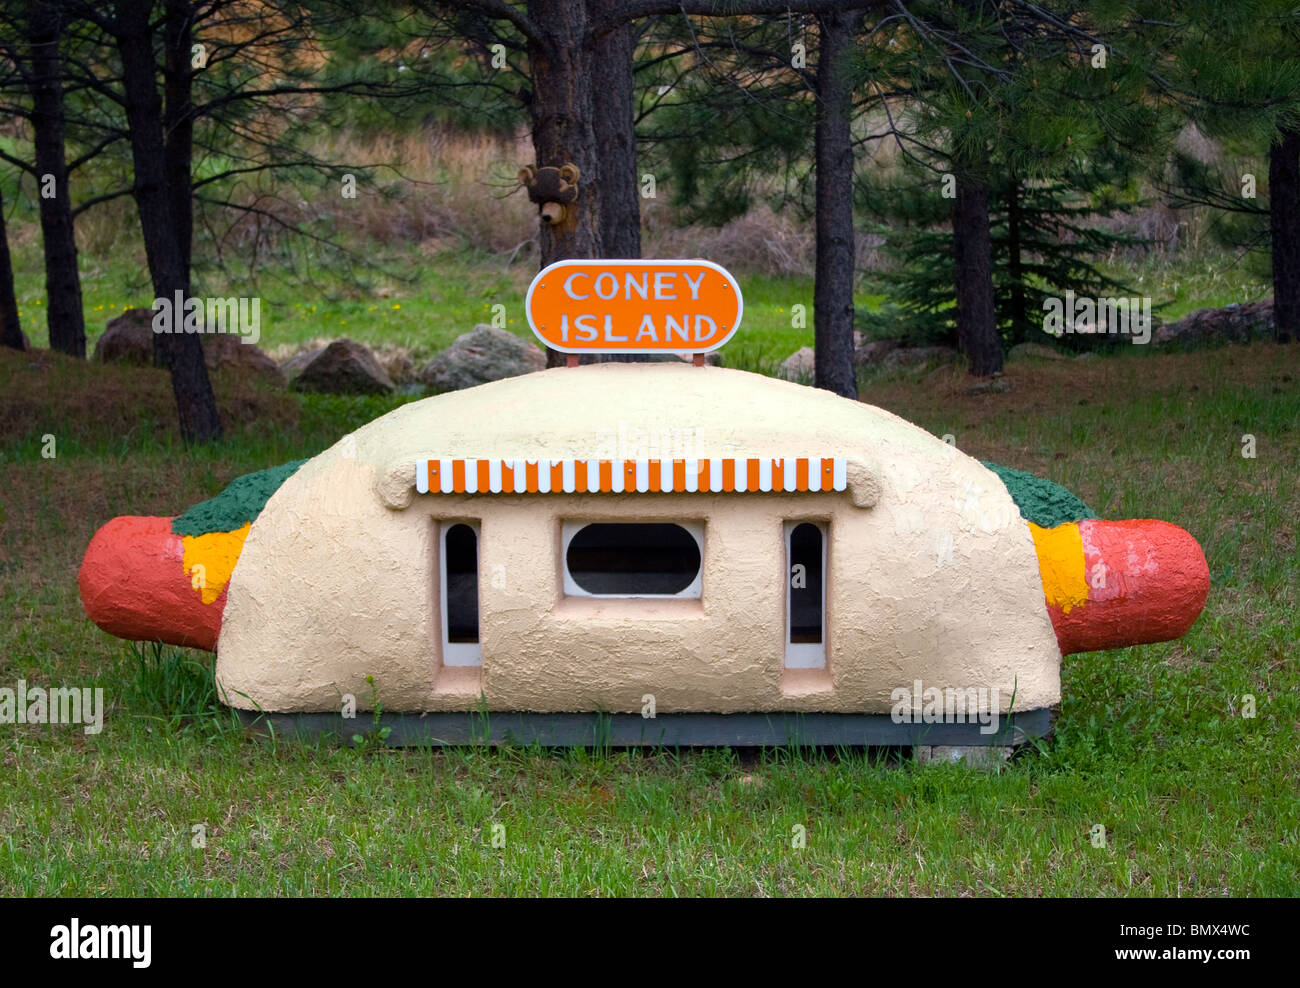 Coney Island hot dog stand miniature replica in Indian Hills, Colorado. Stock Photo